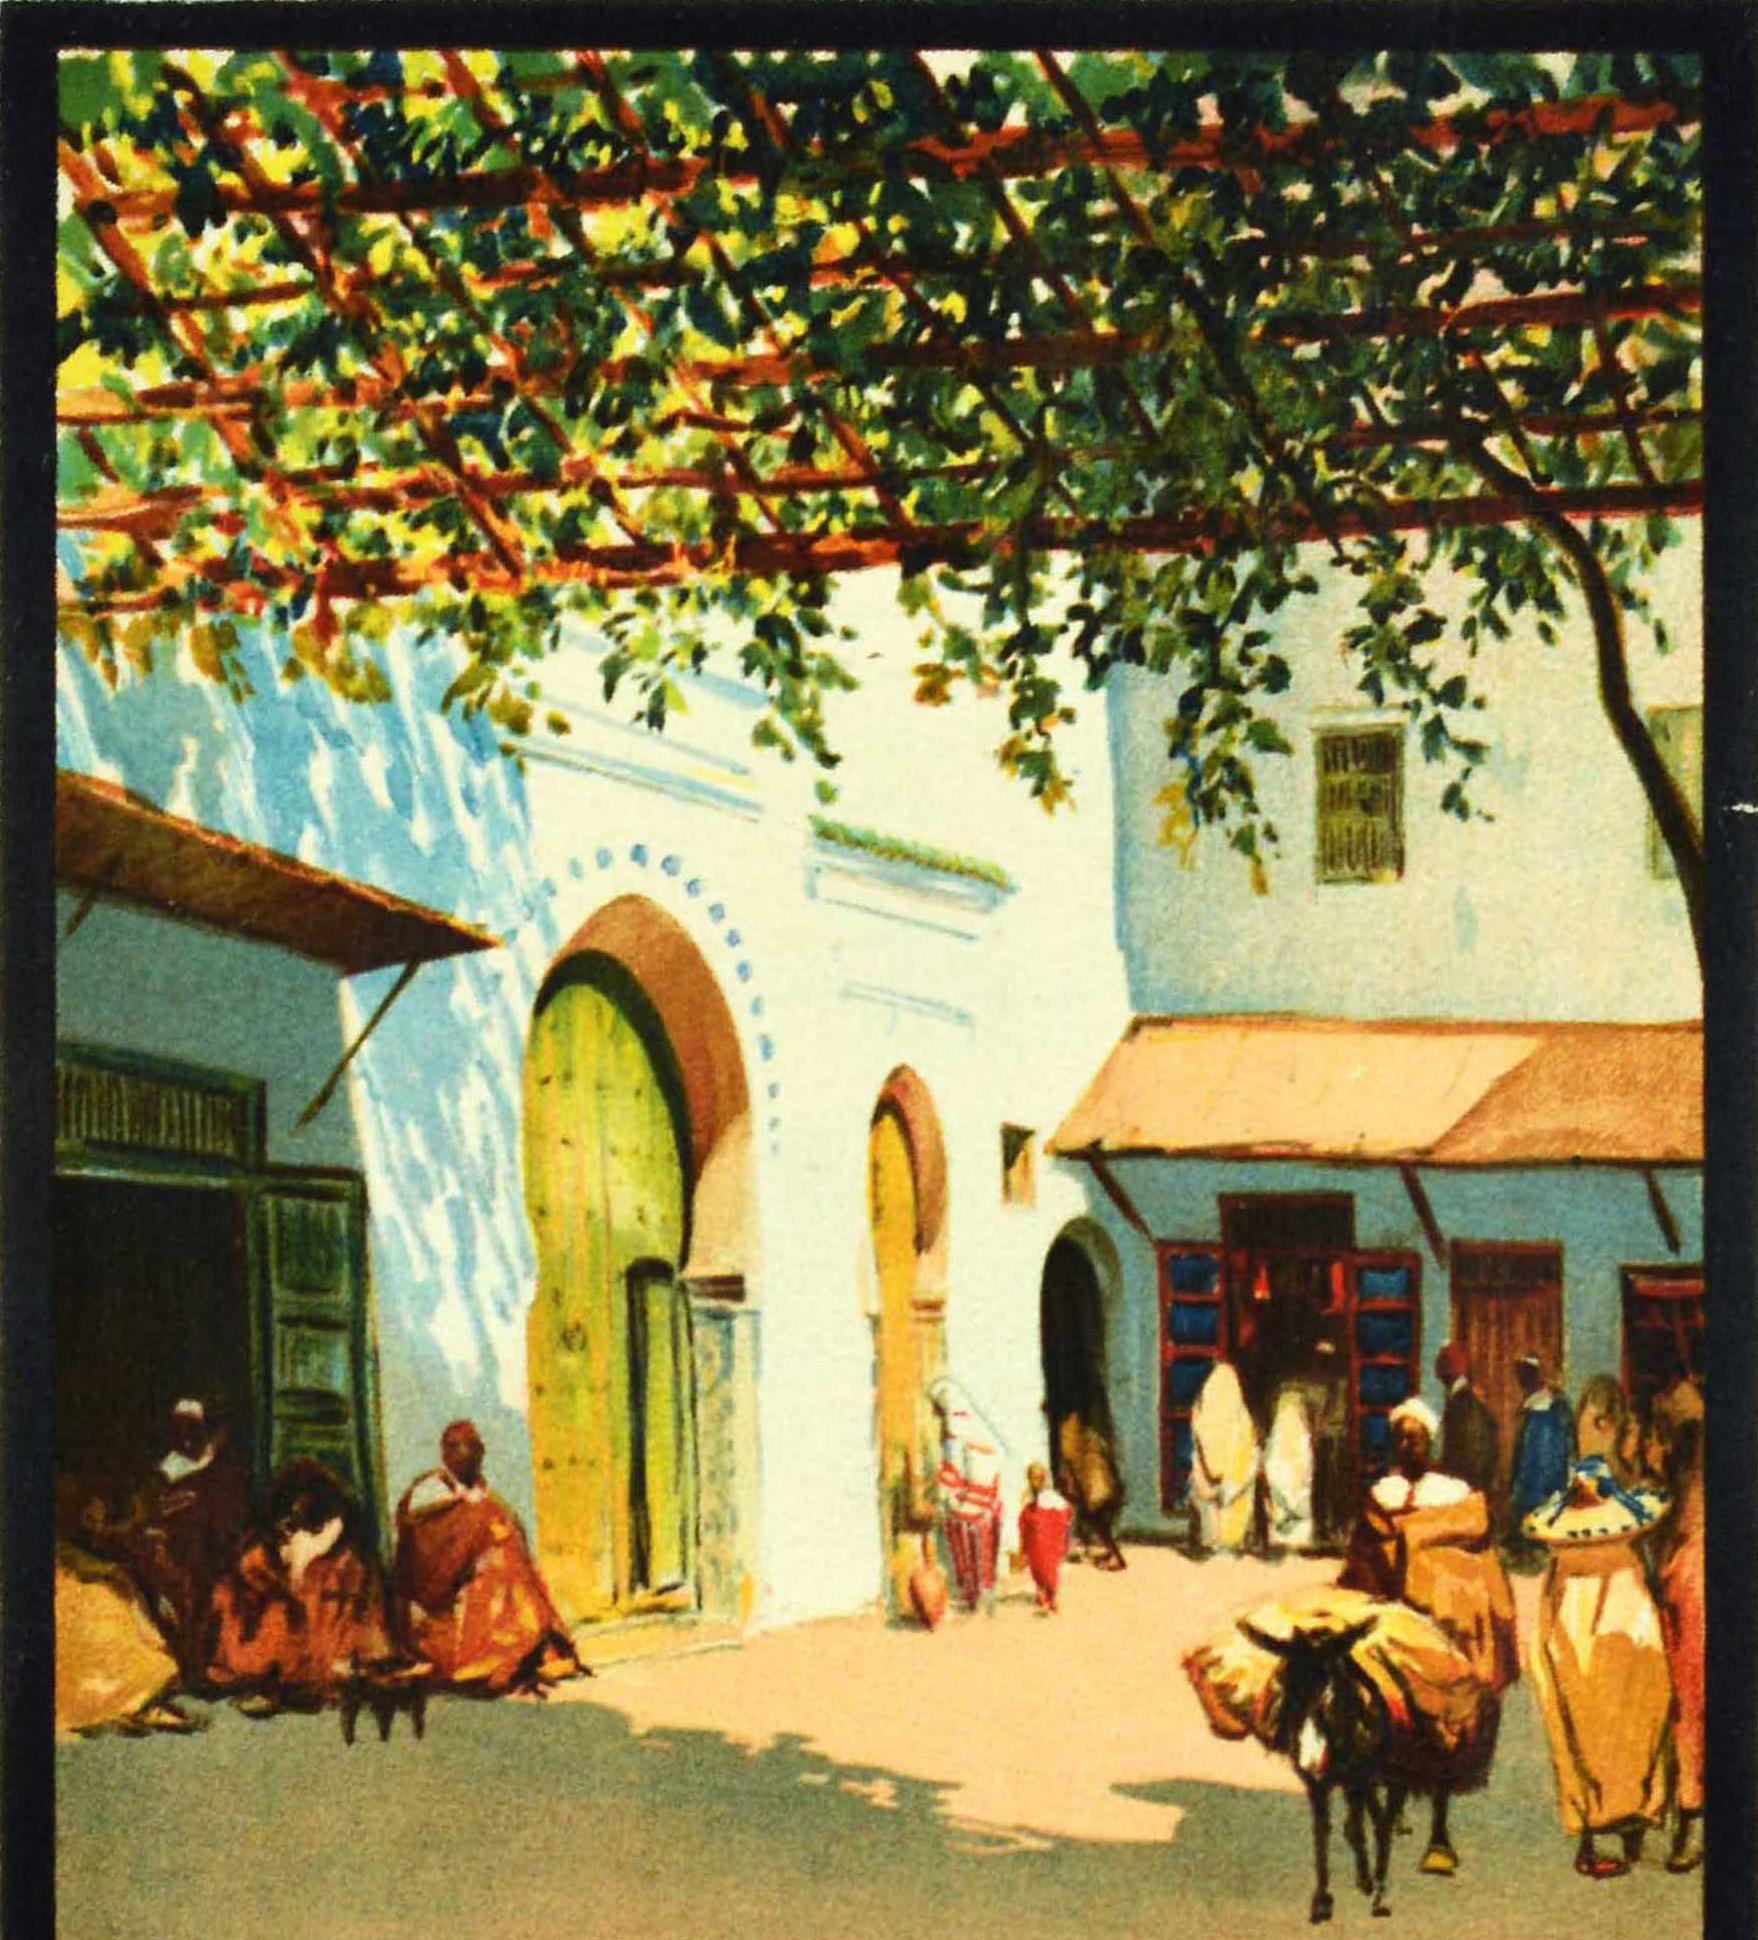 Spanish Original Vintage Travel Poster Tetuan Espanol Africa Morocco Mediterranean Sea